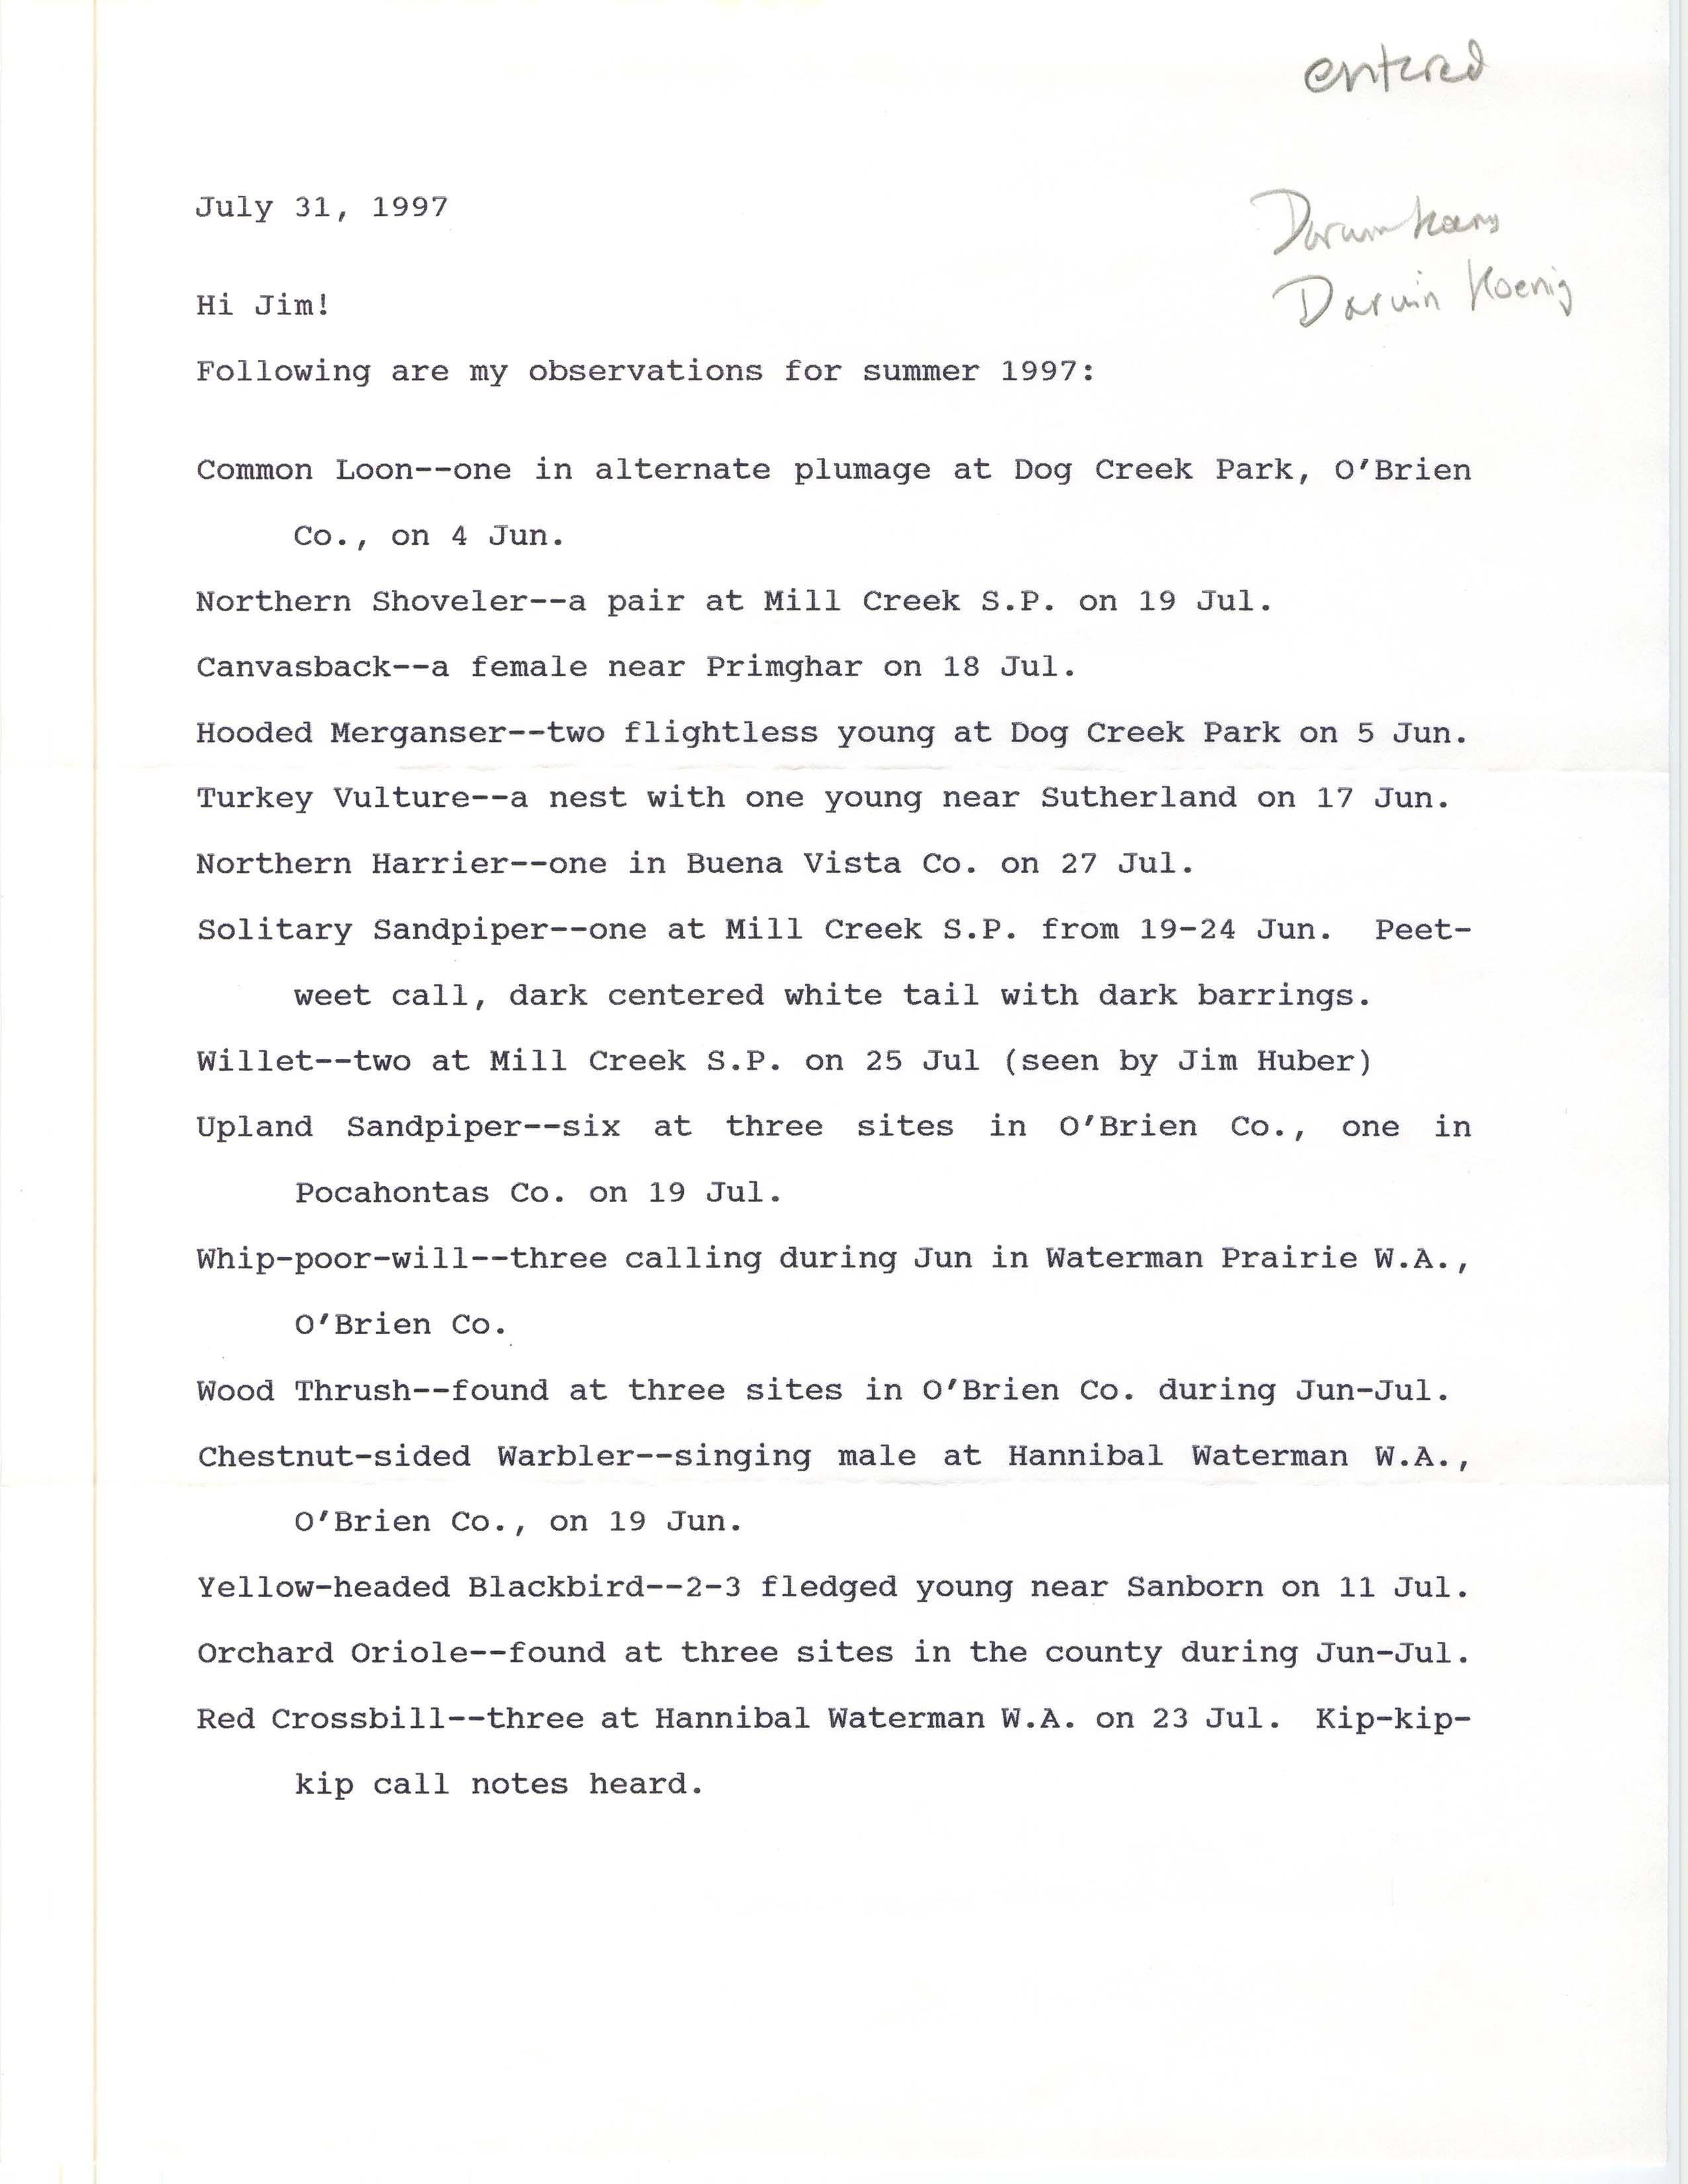 Darwin Koenig letter to James J. Dinsmore regarding summer bird sightings, July 31, 1997